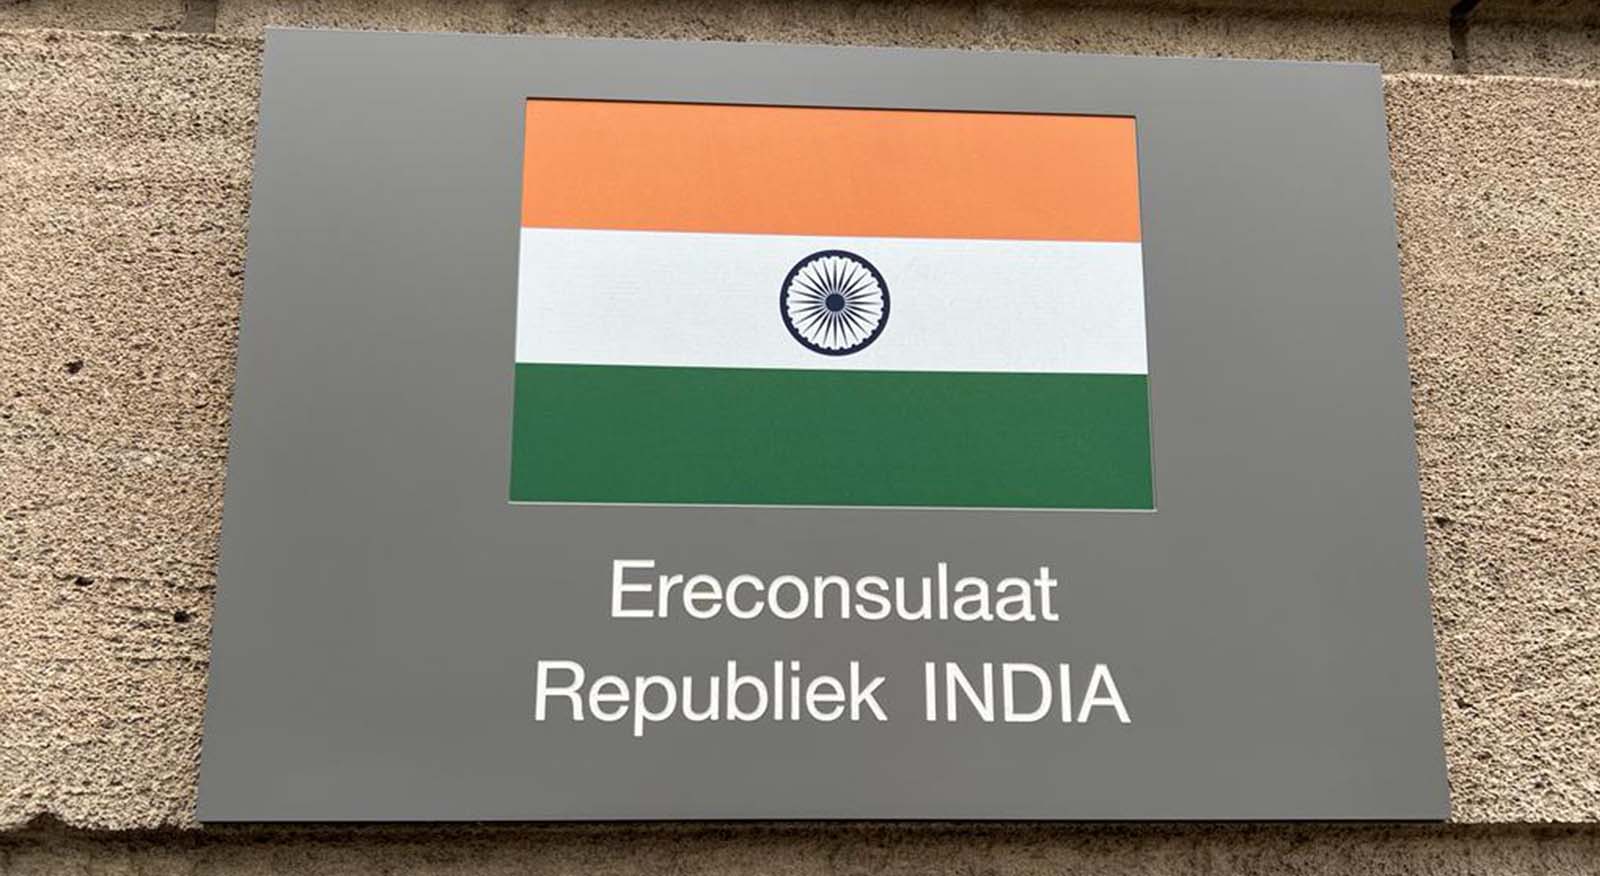 Honorary Consul General of India for Antwerp, Limburg, East Flanders & West Flanders